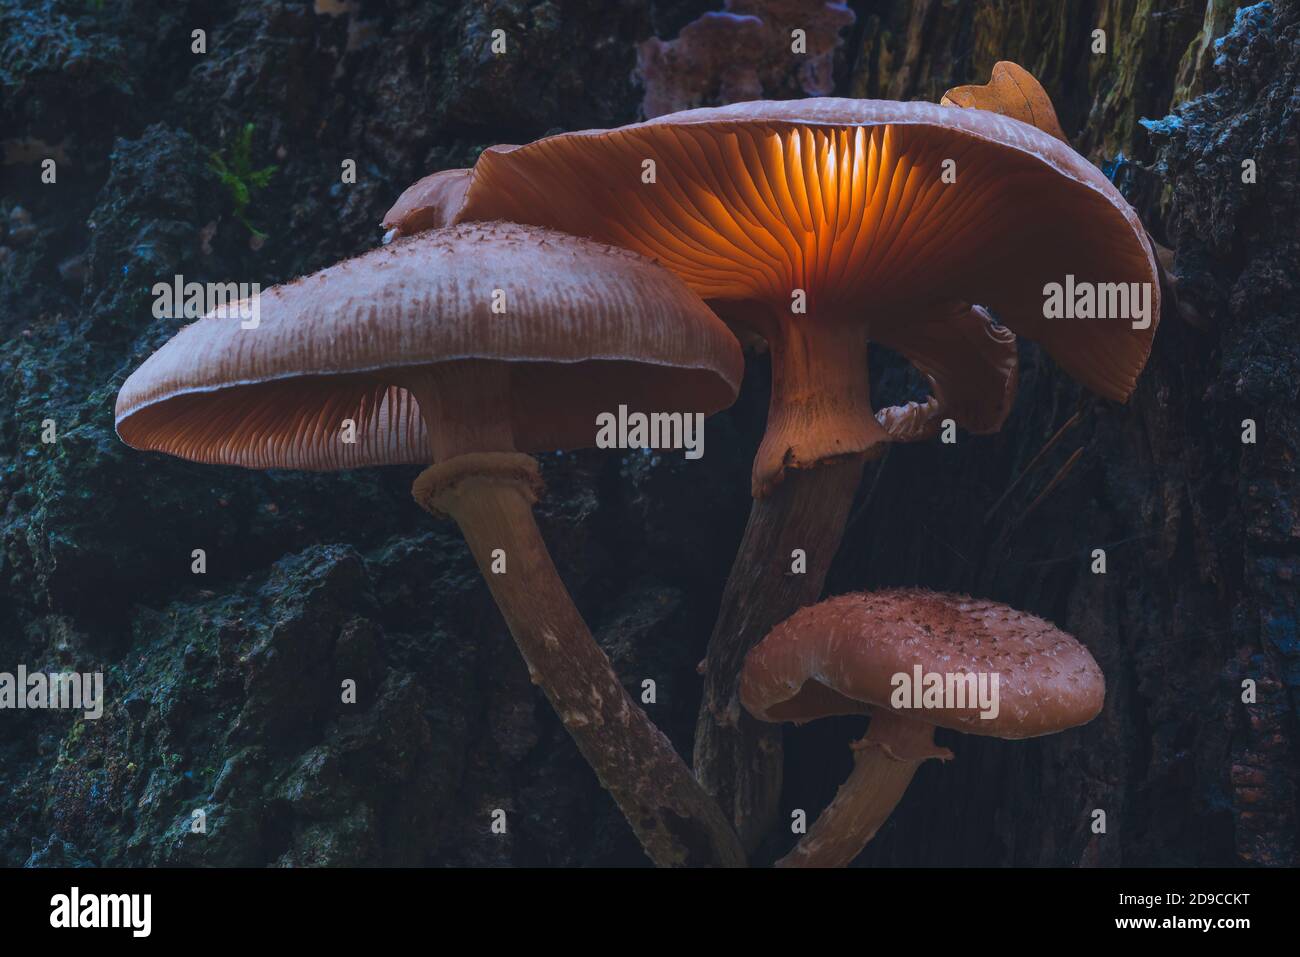 Glowing mushroom that grows on a tree trunk, glowing mushroom Stock Photo